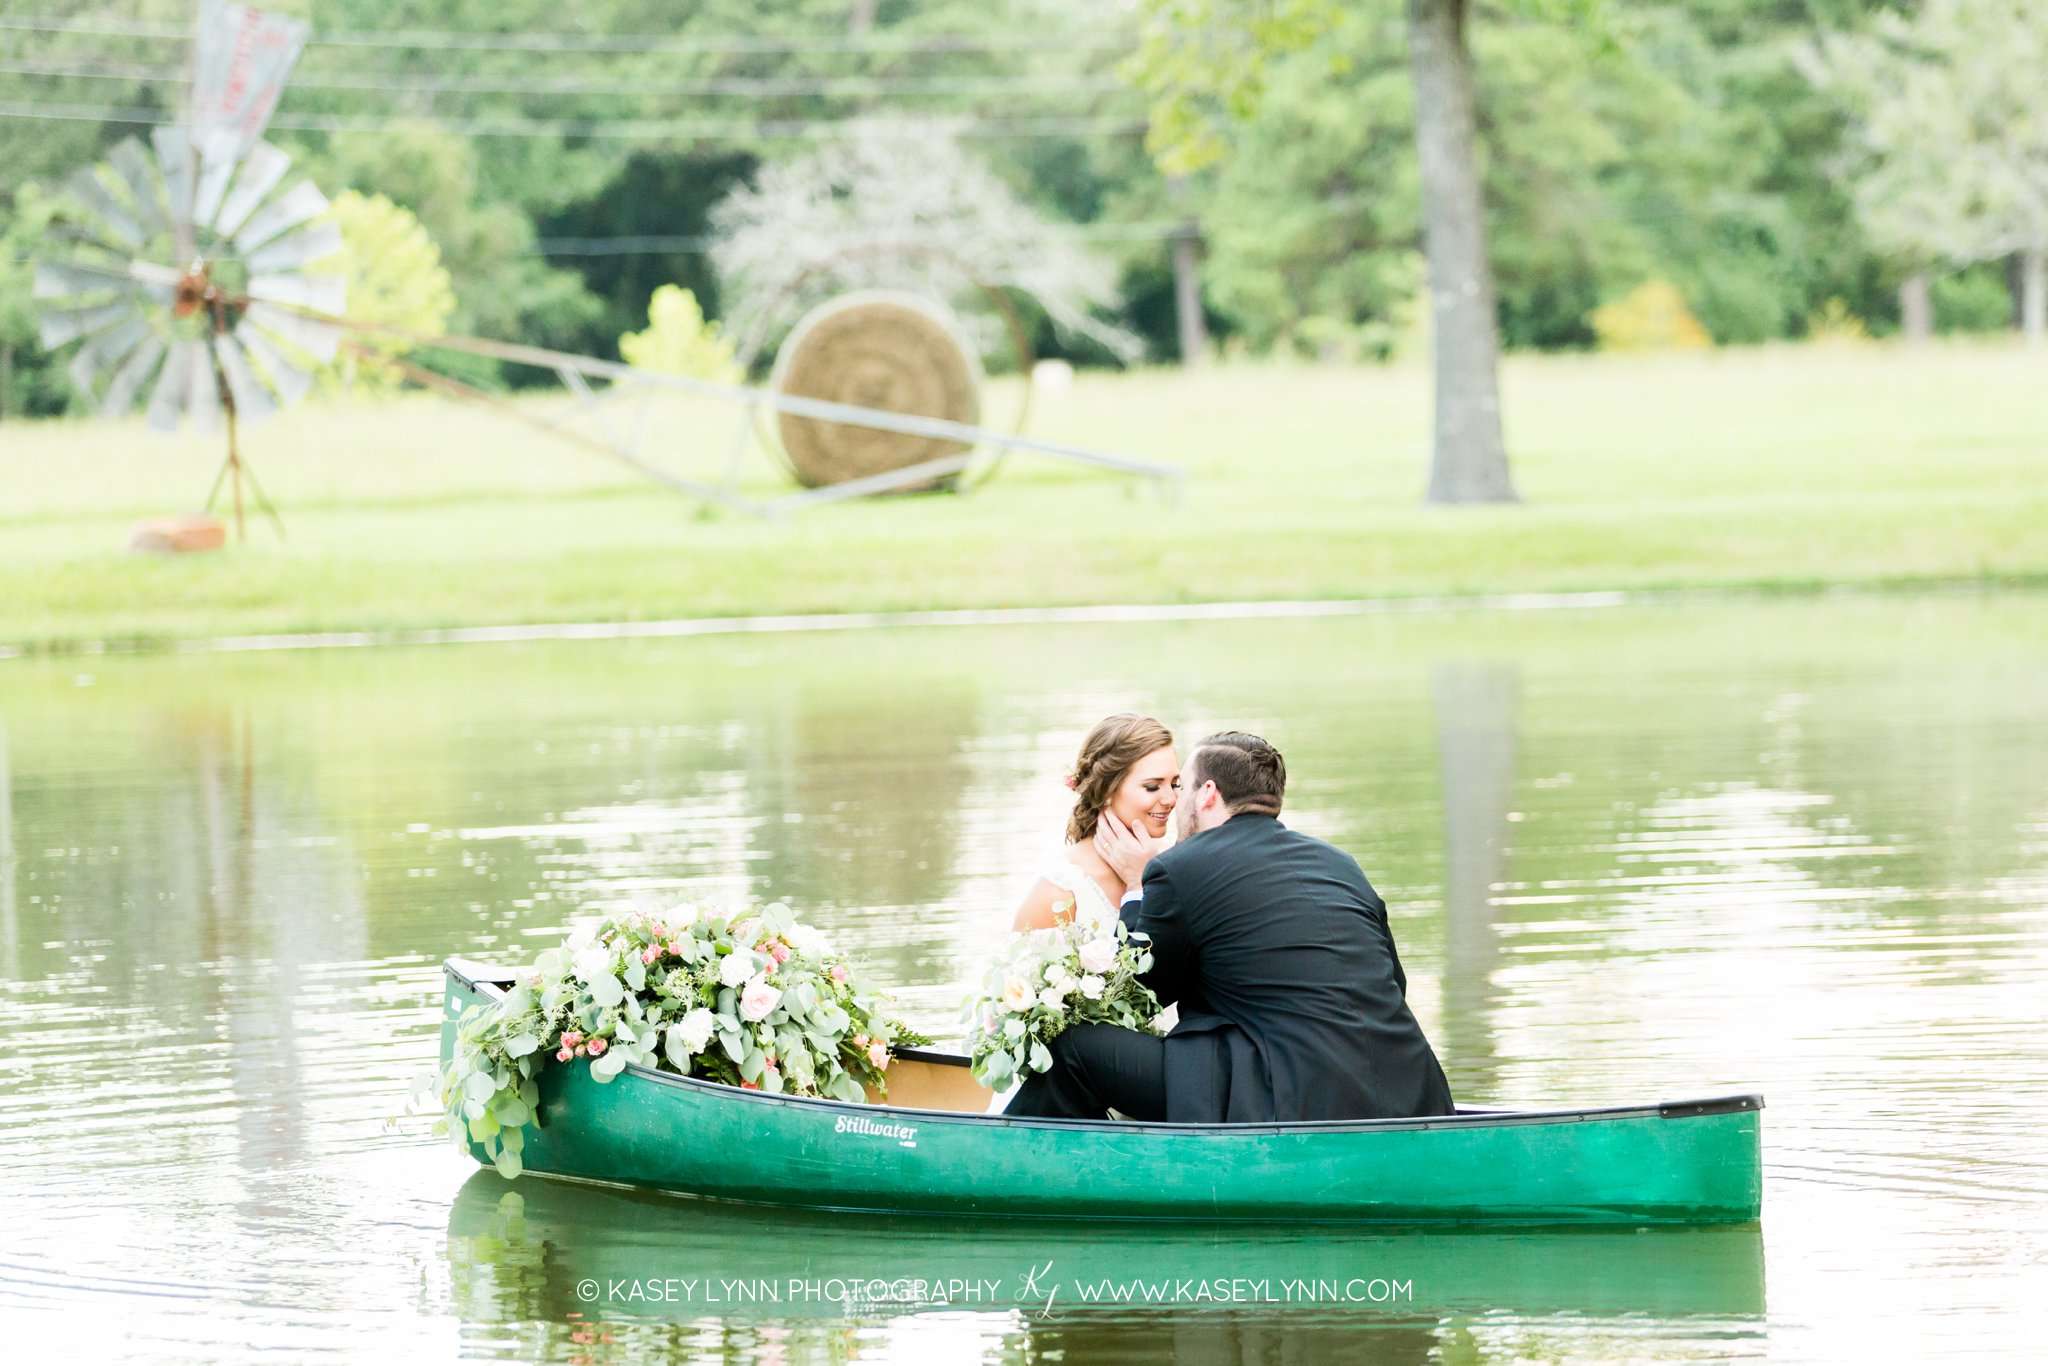 Magnolia Wedding Photographer / Kasey Lynn Photography